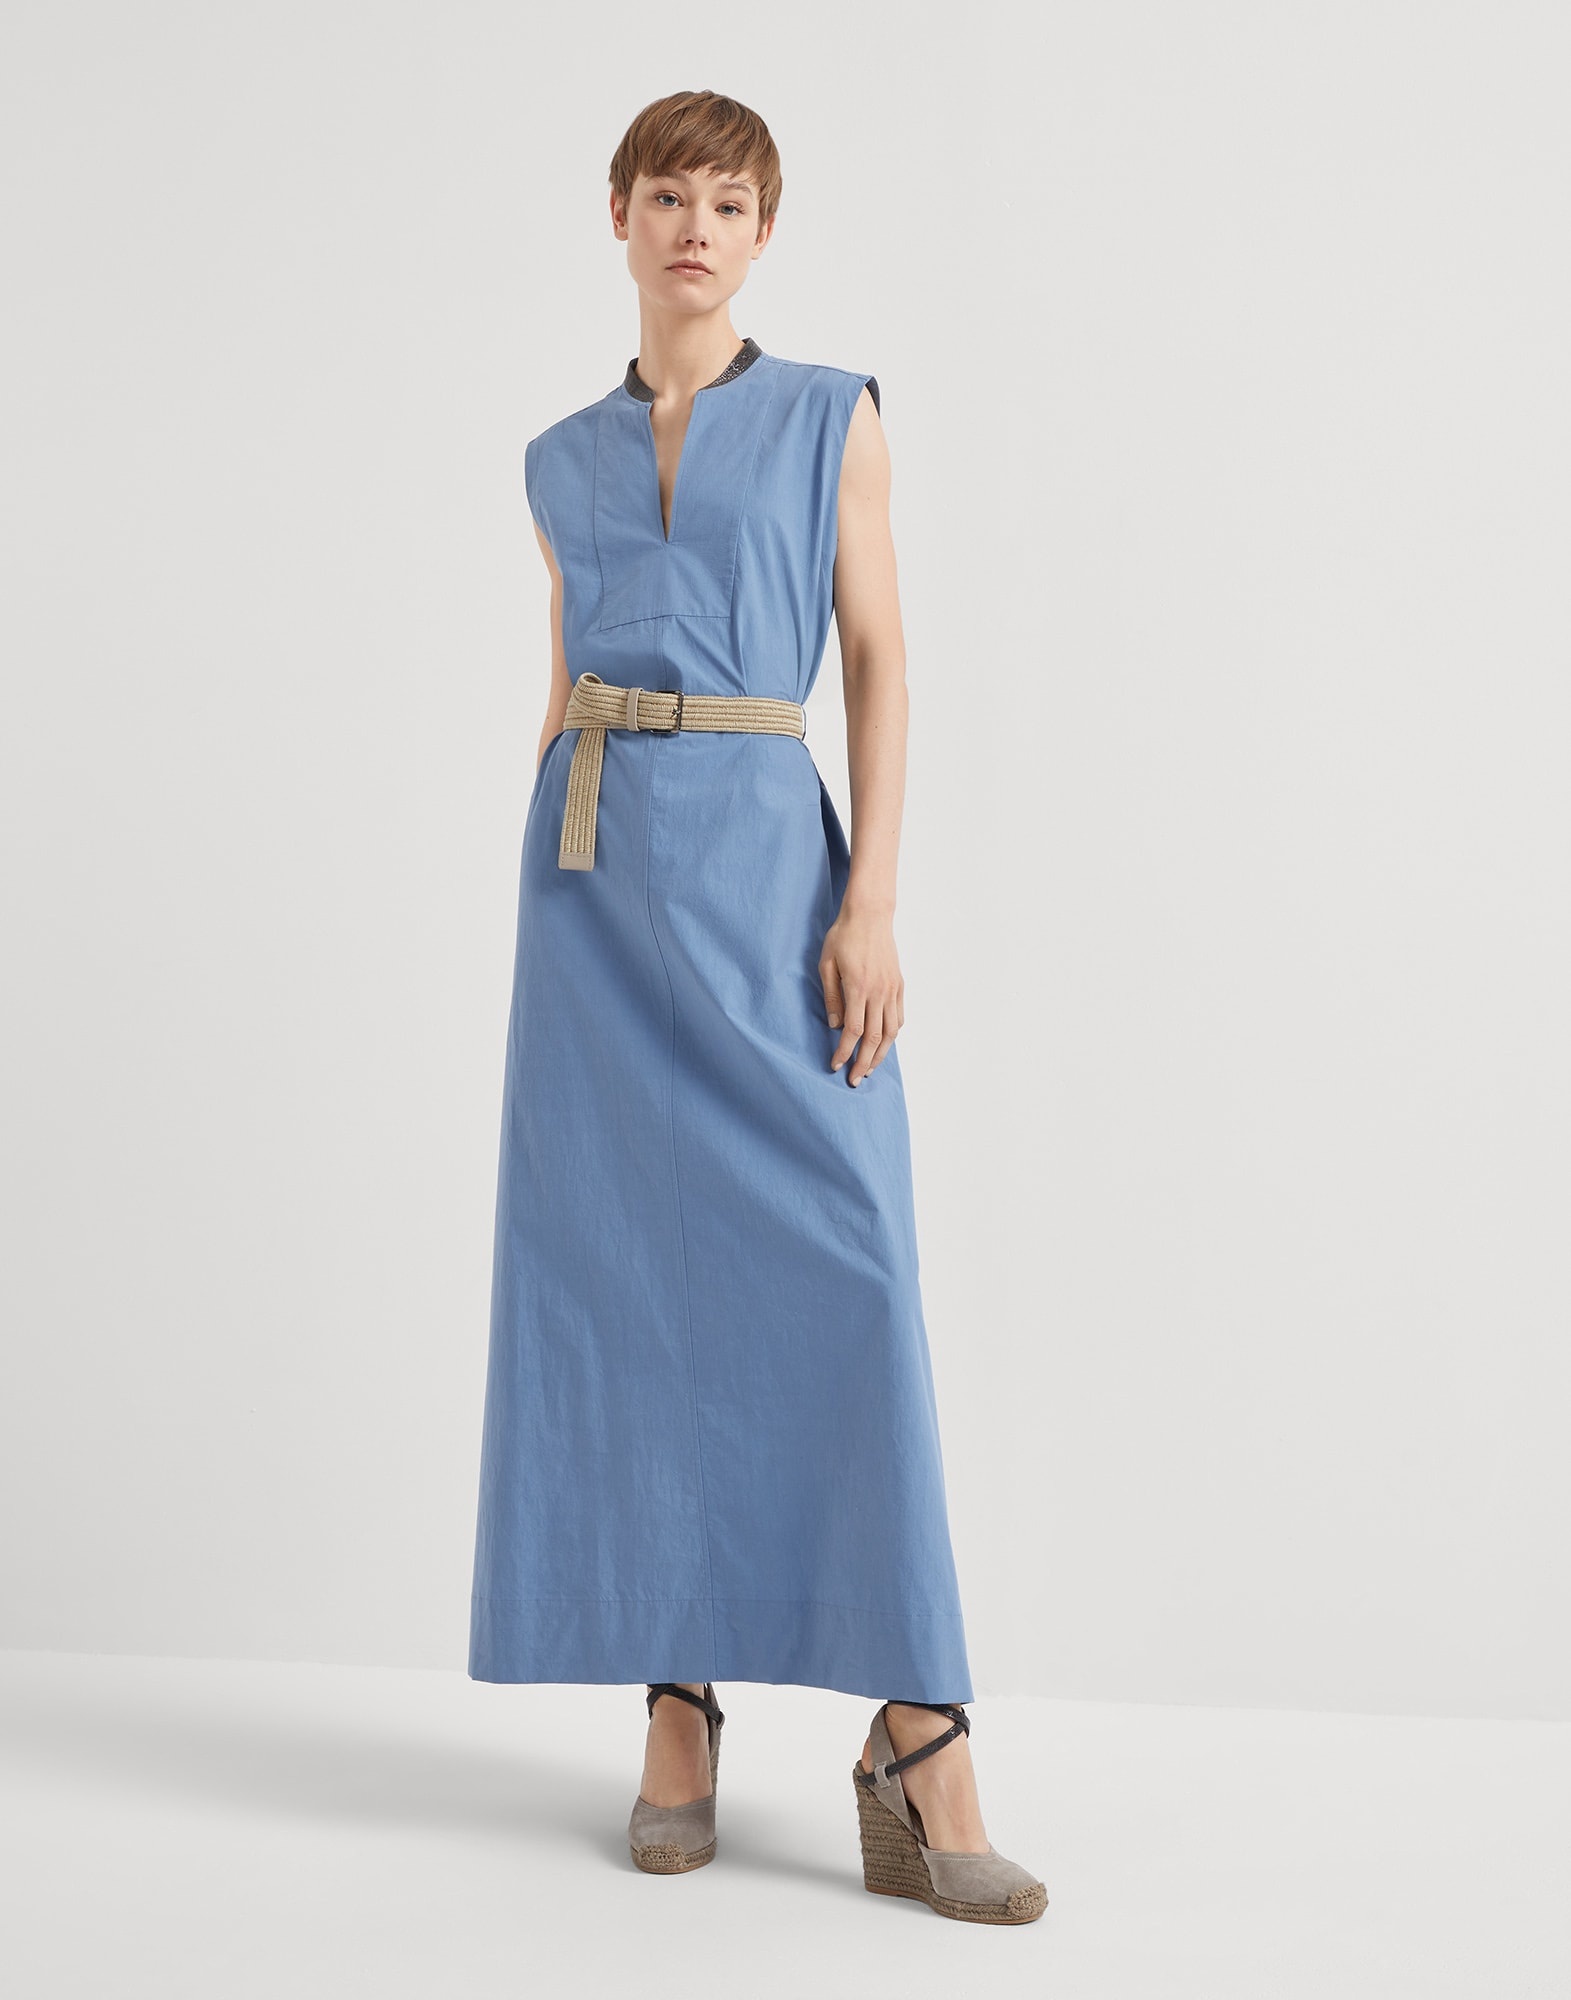 Lightweight wrinkled cotton poplin dress with raffia belt and precious neckline - 1